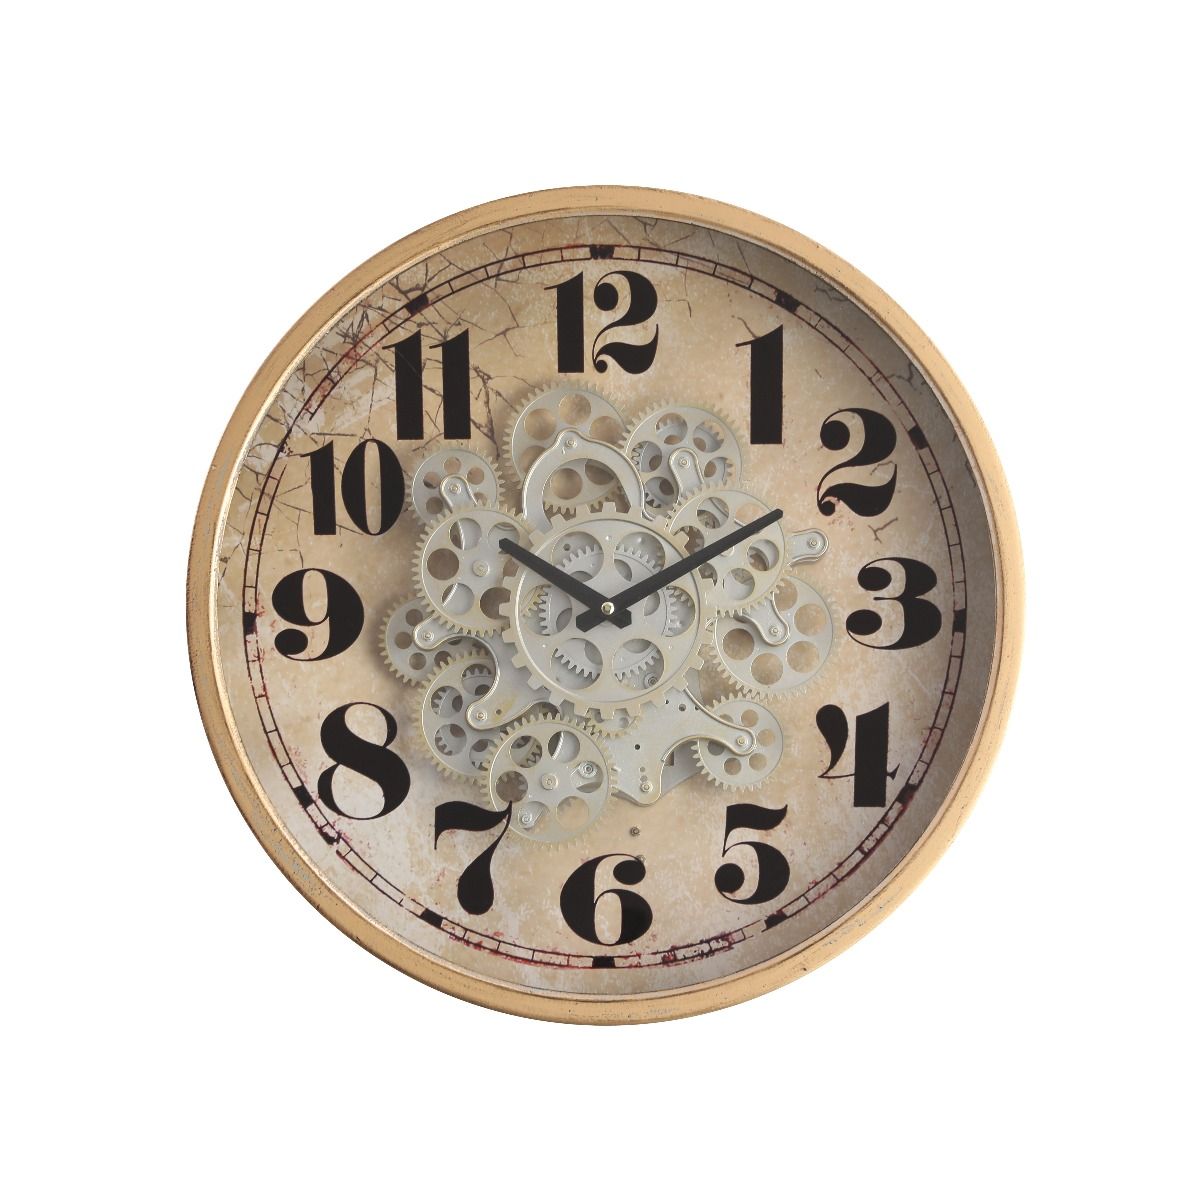 Industrial/vintage-inspired clock range - MODEL 04